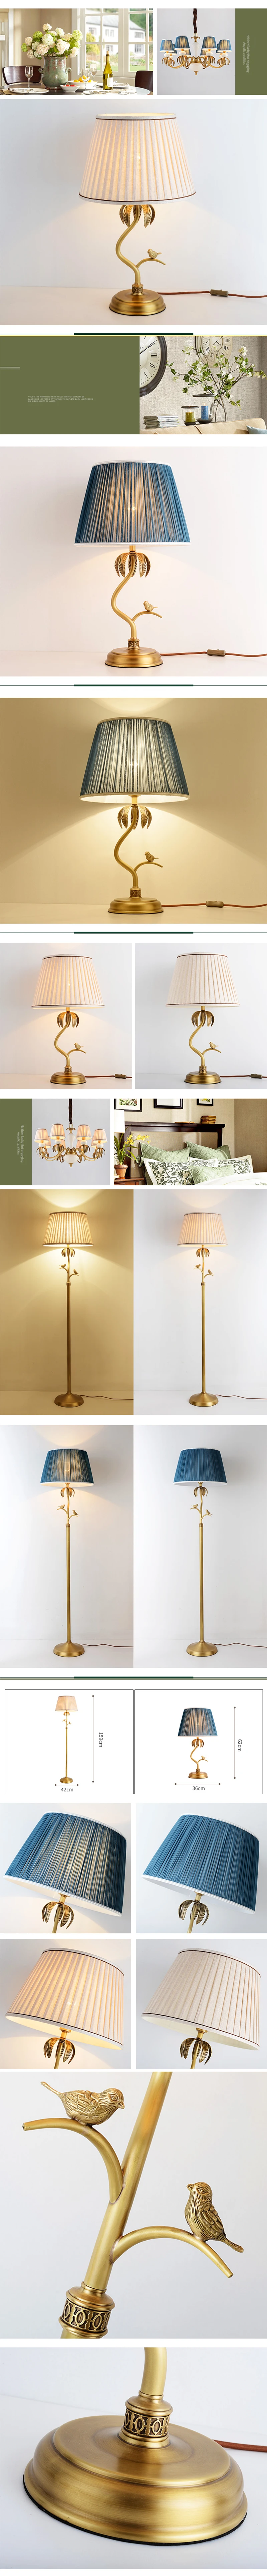 Moderen design E26 led standard floor lamp for home and bedroom decoration